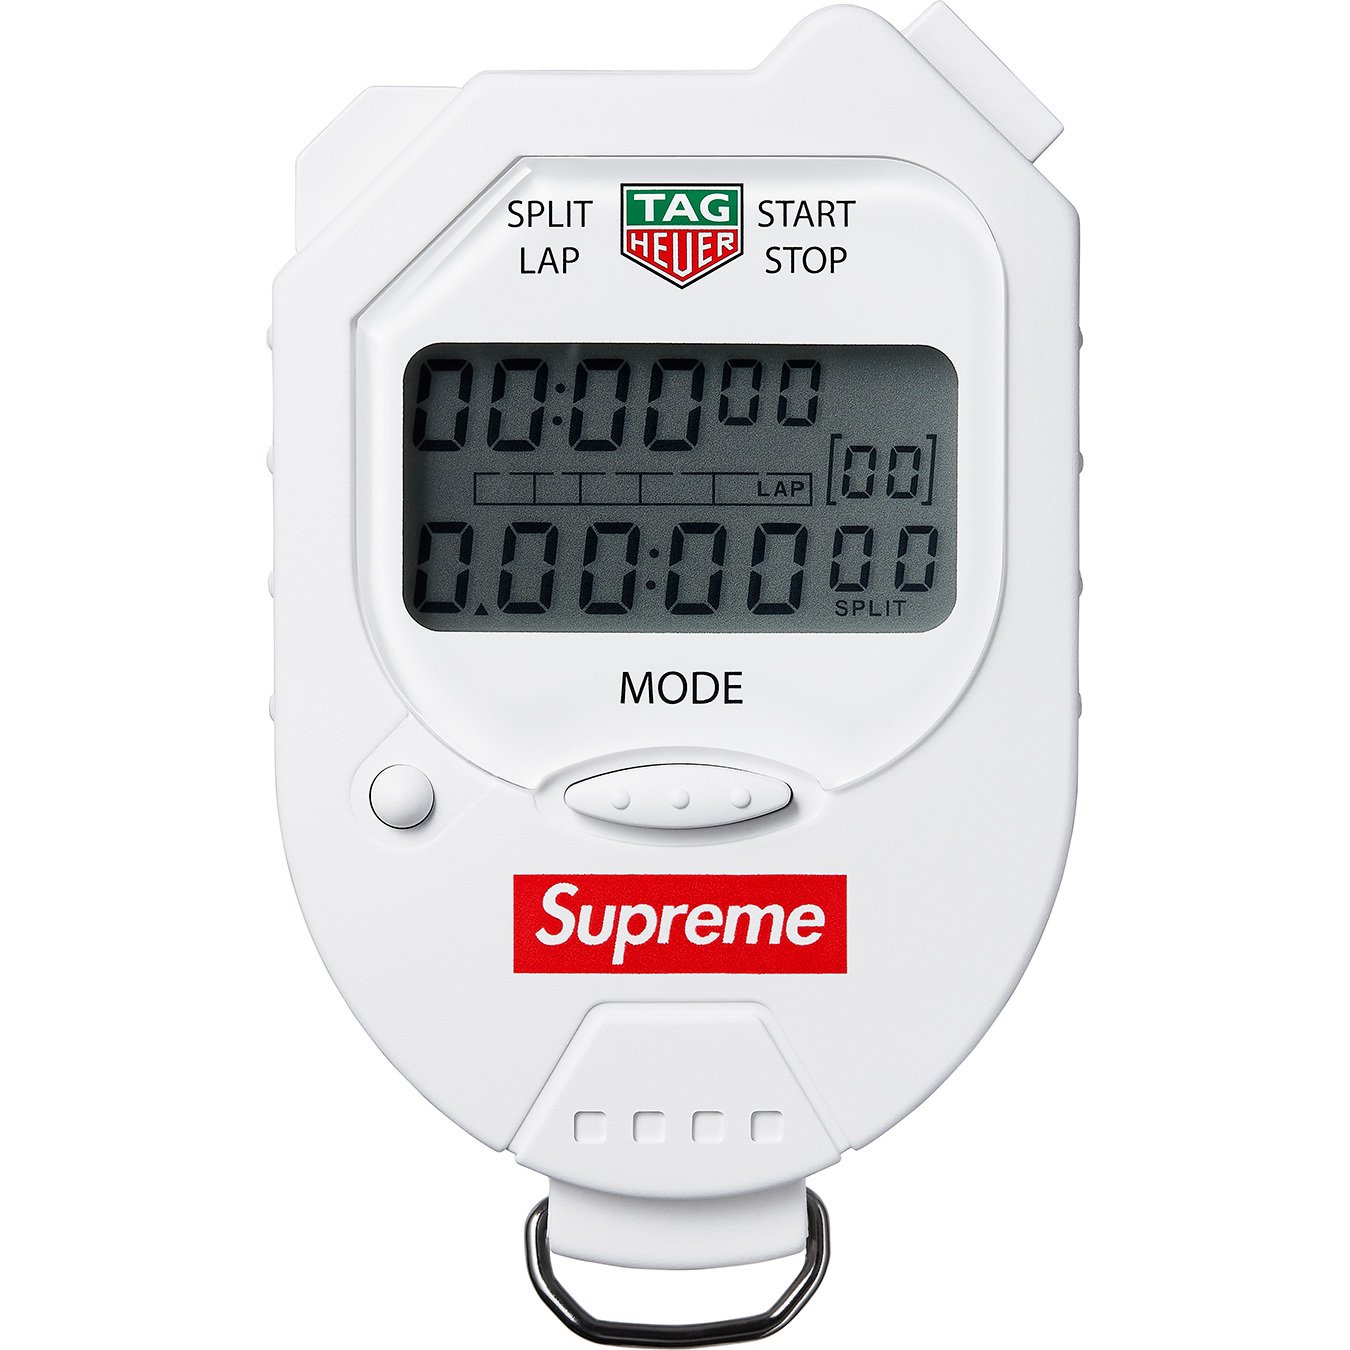 Supreme®/Tag Heuer® Pocket Pro Stopwatch